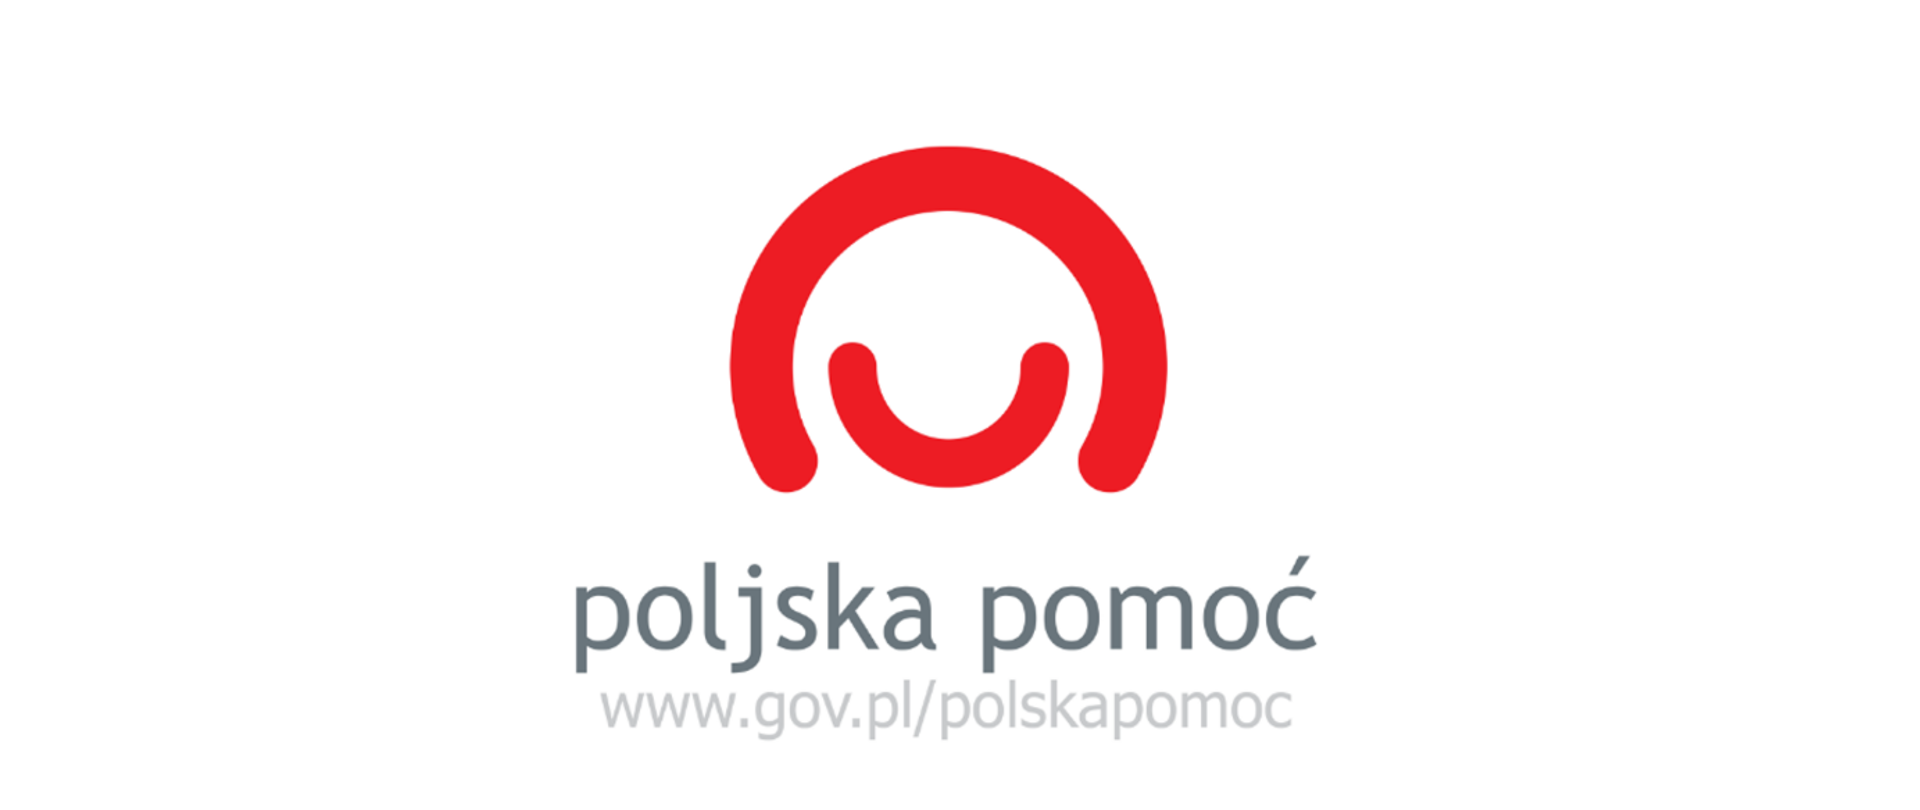 poljska_pomoć_logo